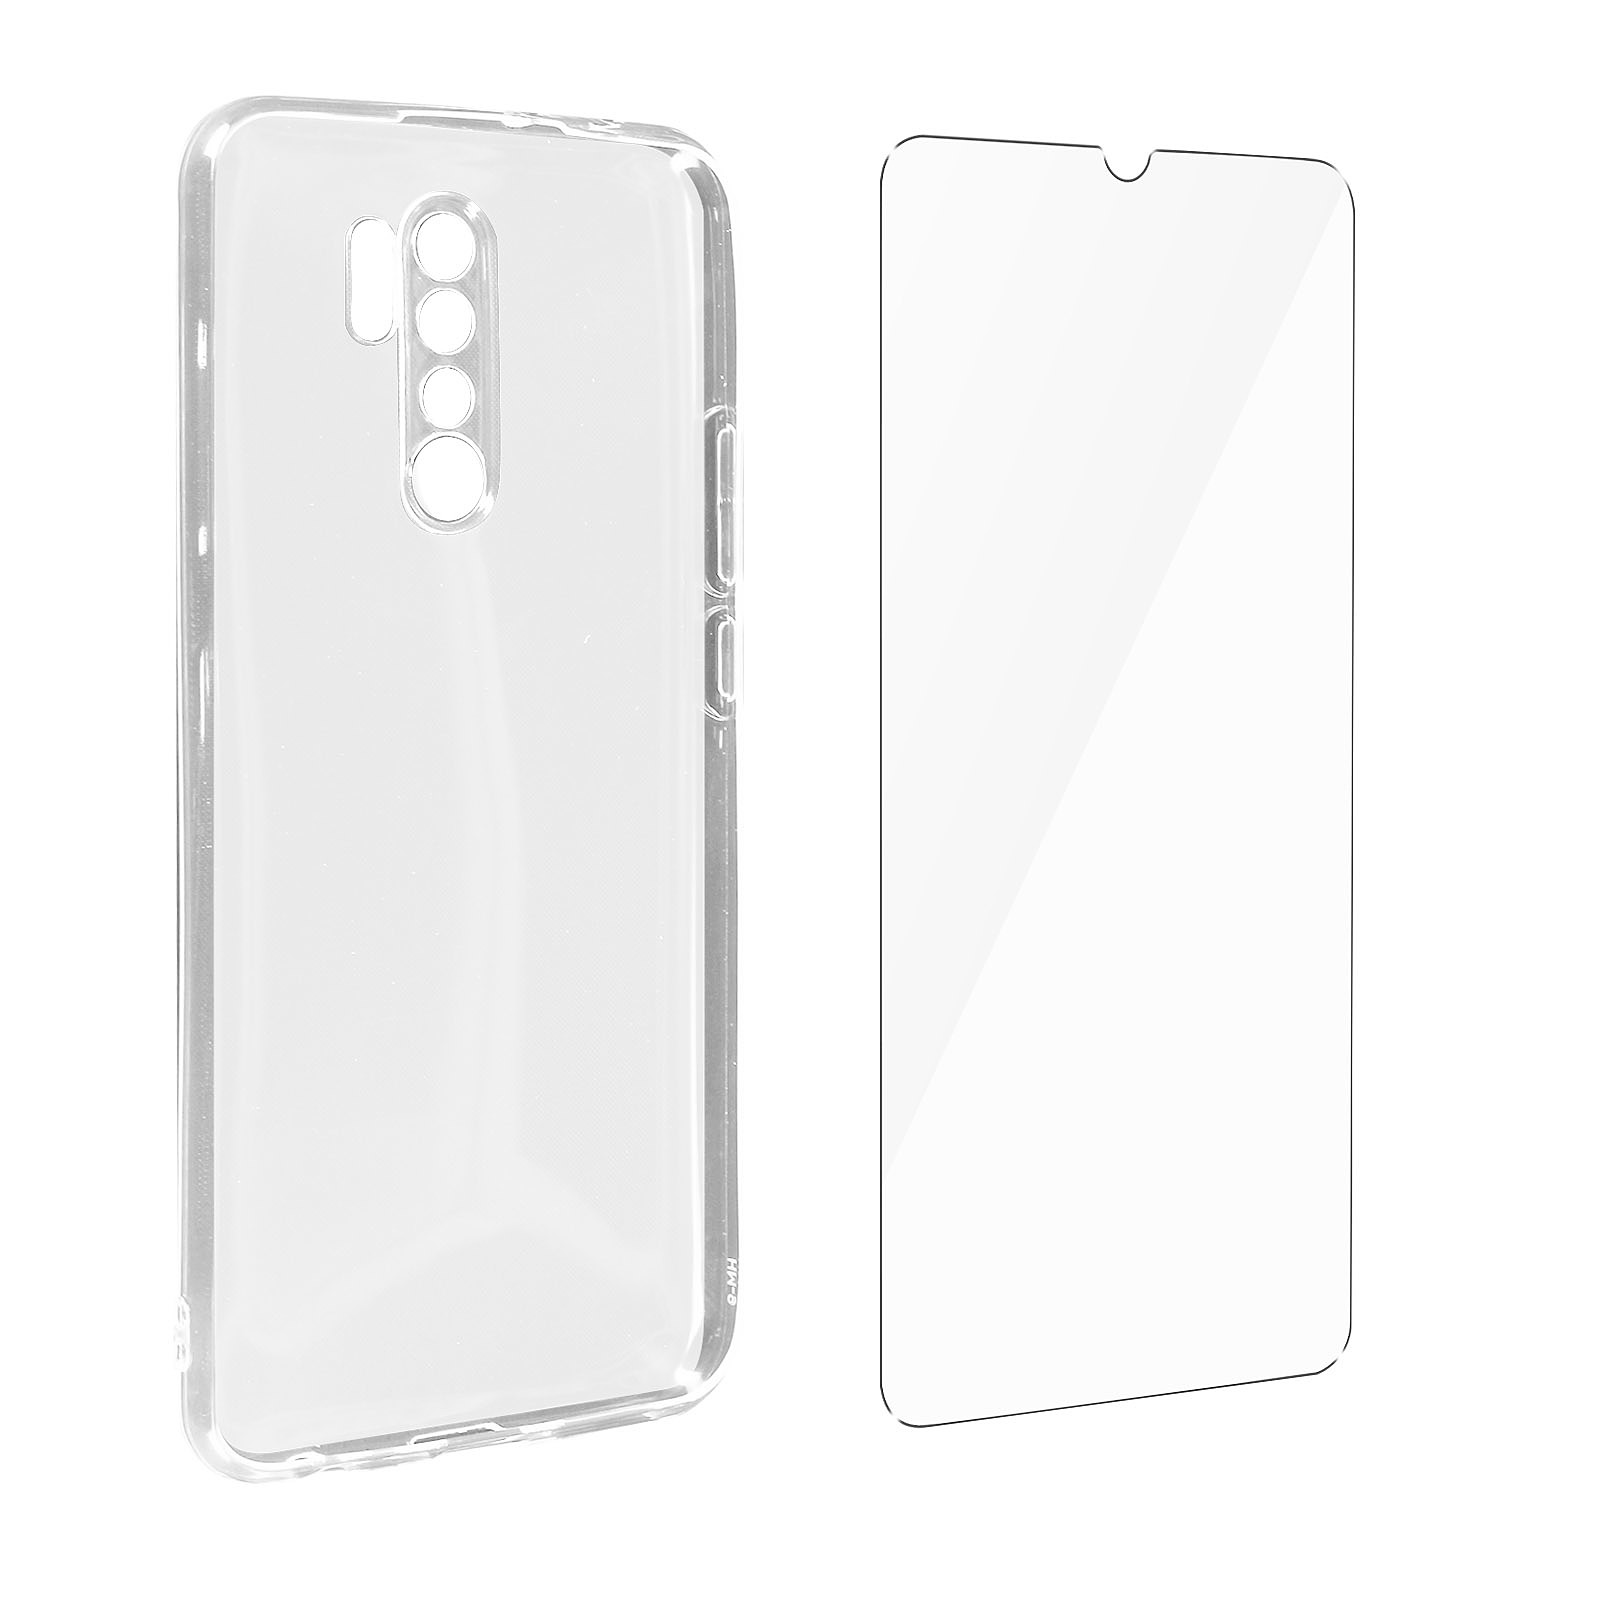 Avizar Coque pour Xiaomi Redmi 9 Souple et Film Verre Trempe Durete 9H Transparent - Coque telephone Avizar